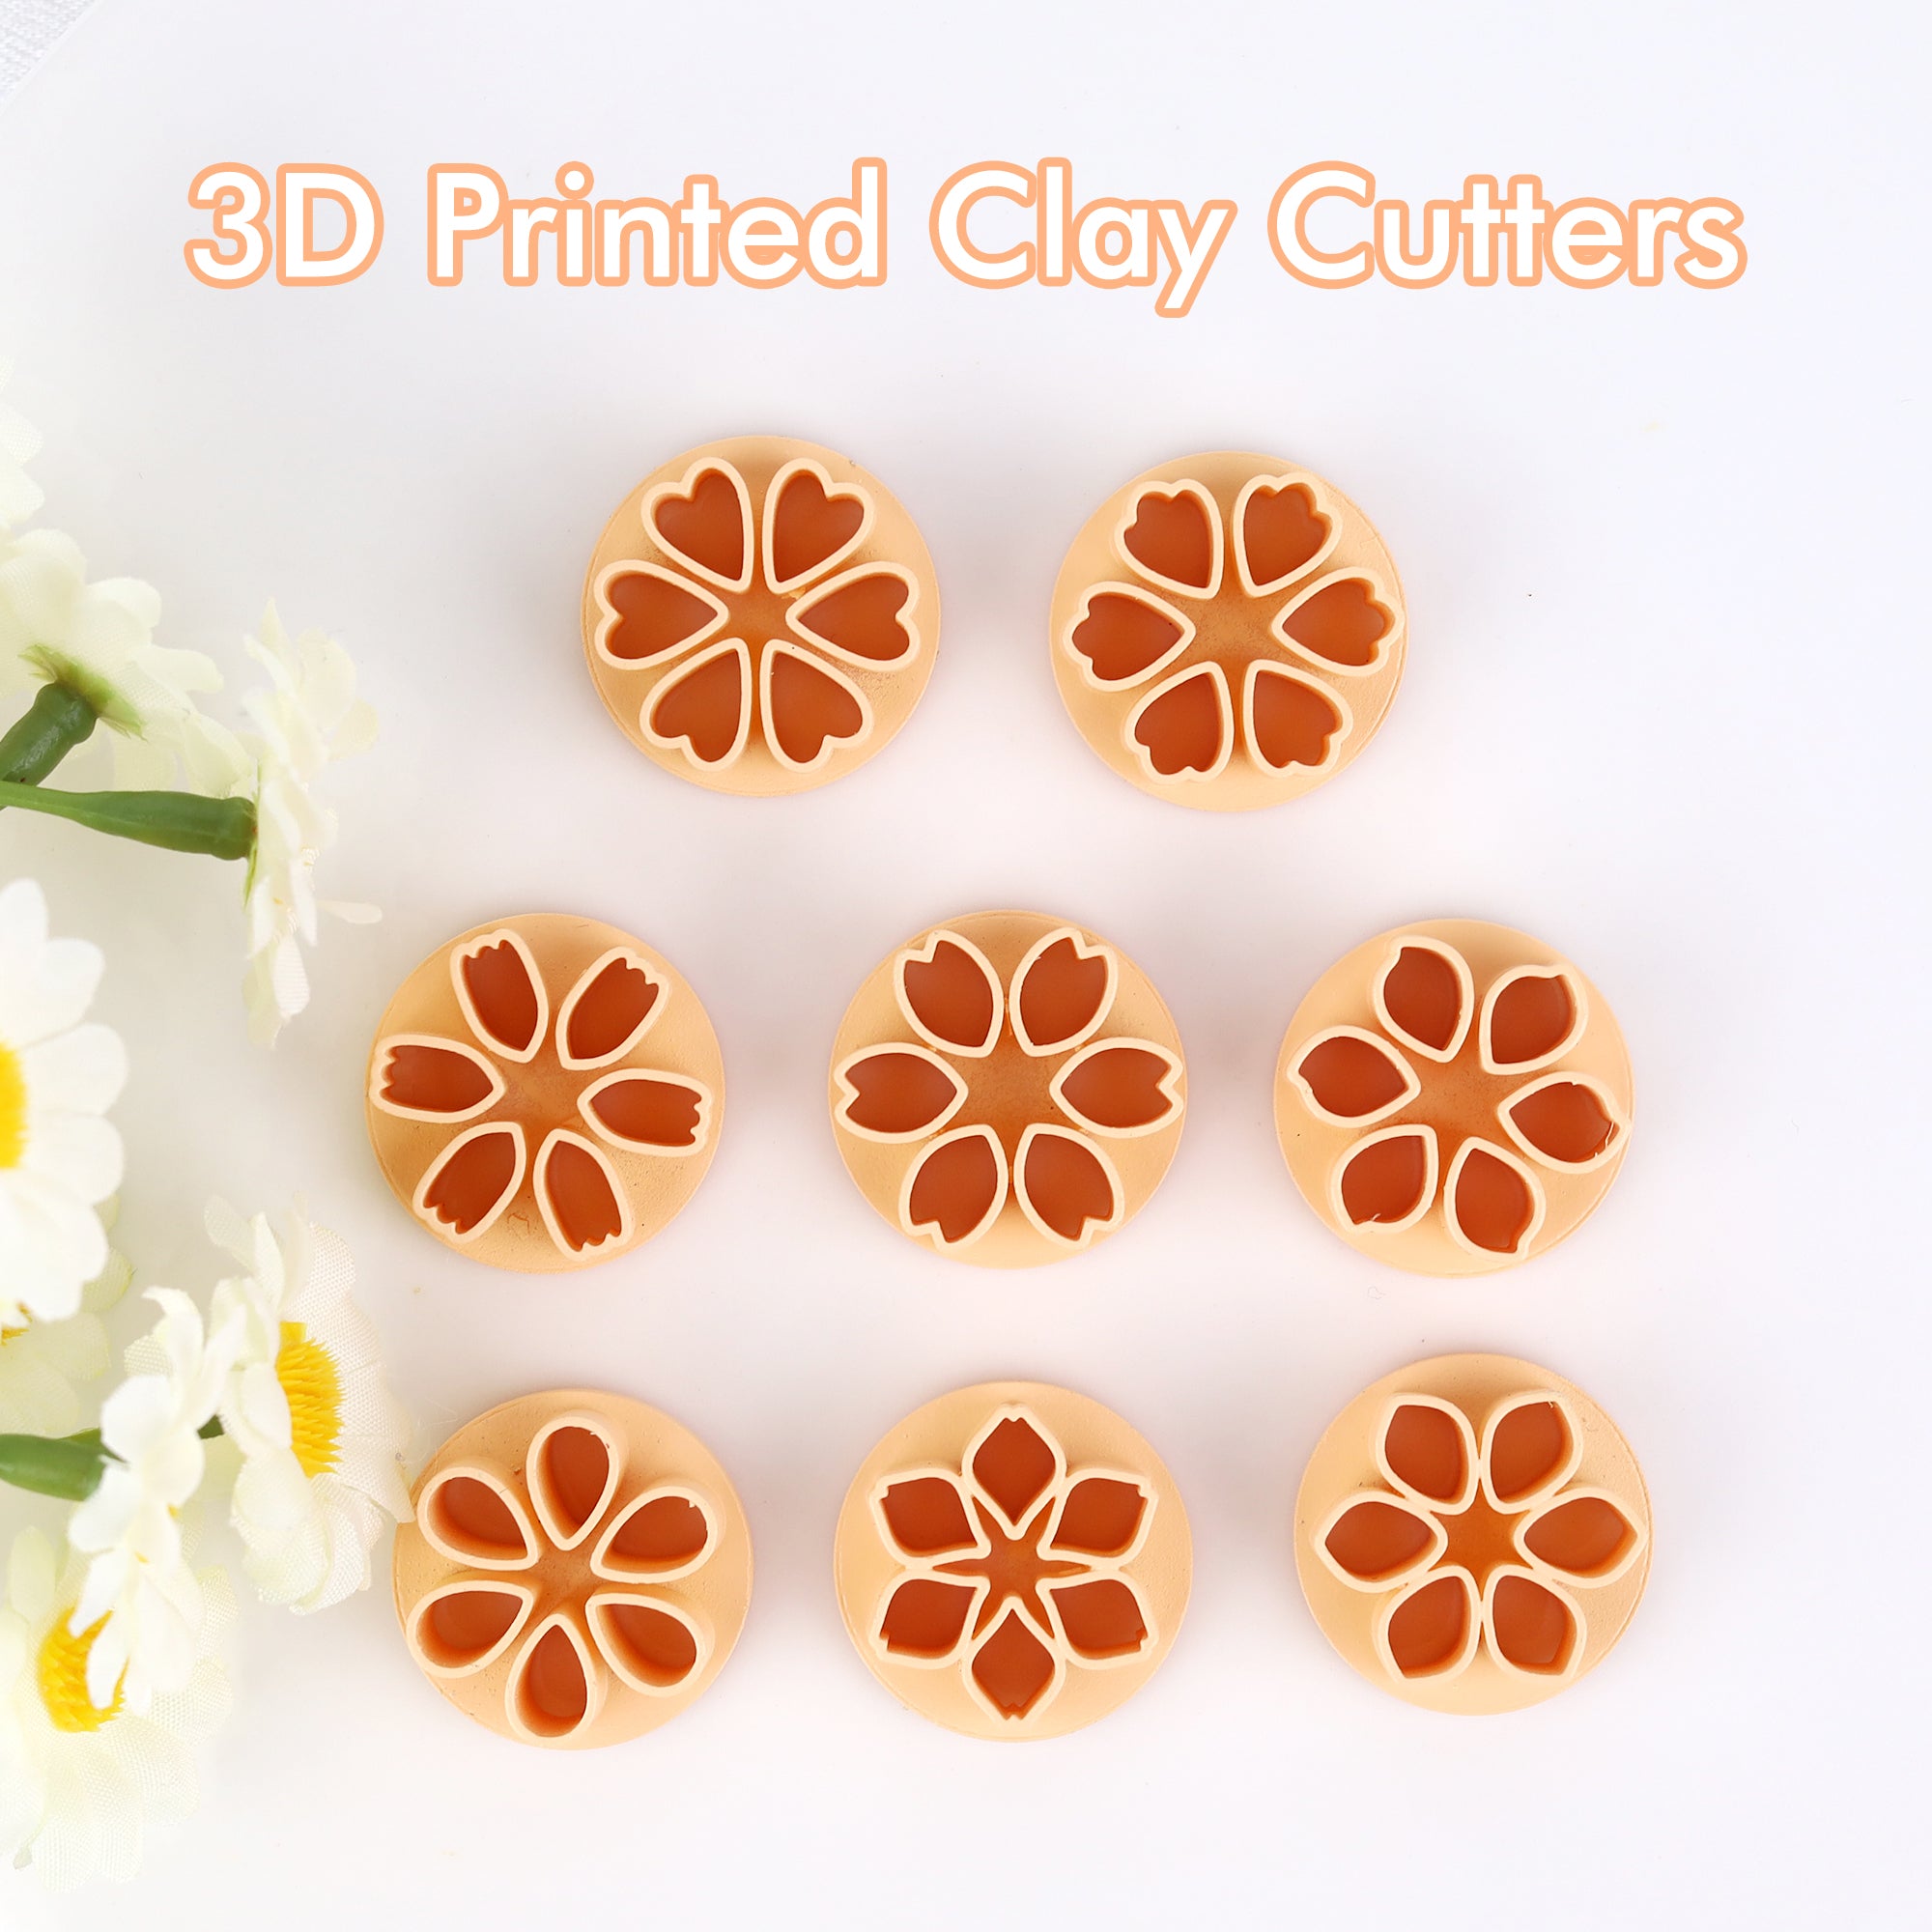 Puocaon Mini Petal Clay Cutters - 8 Shape Petal Clay Cutters